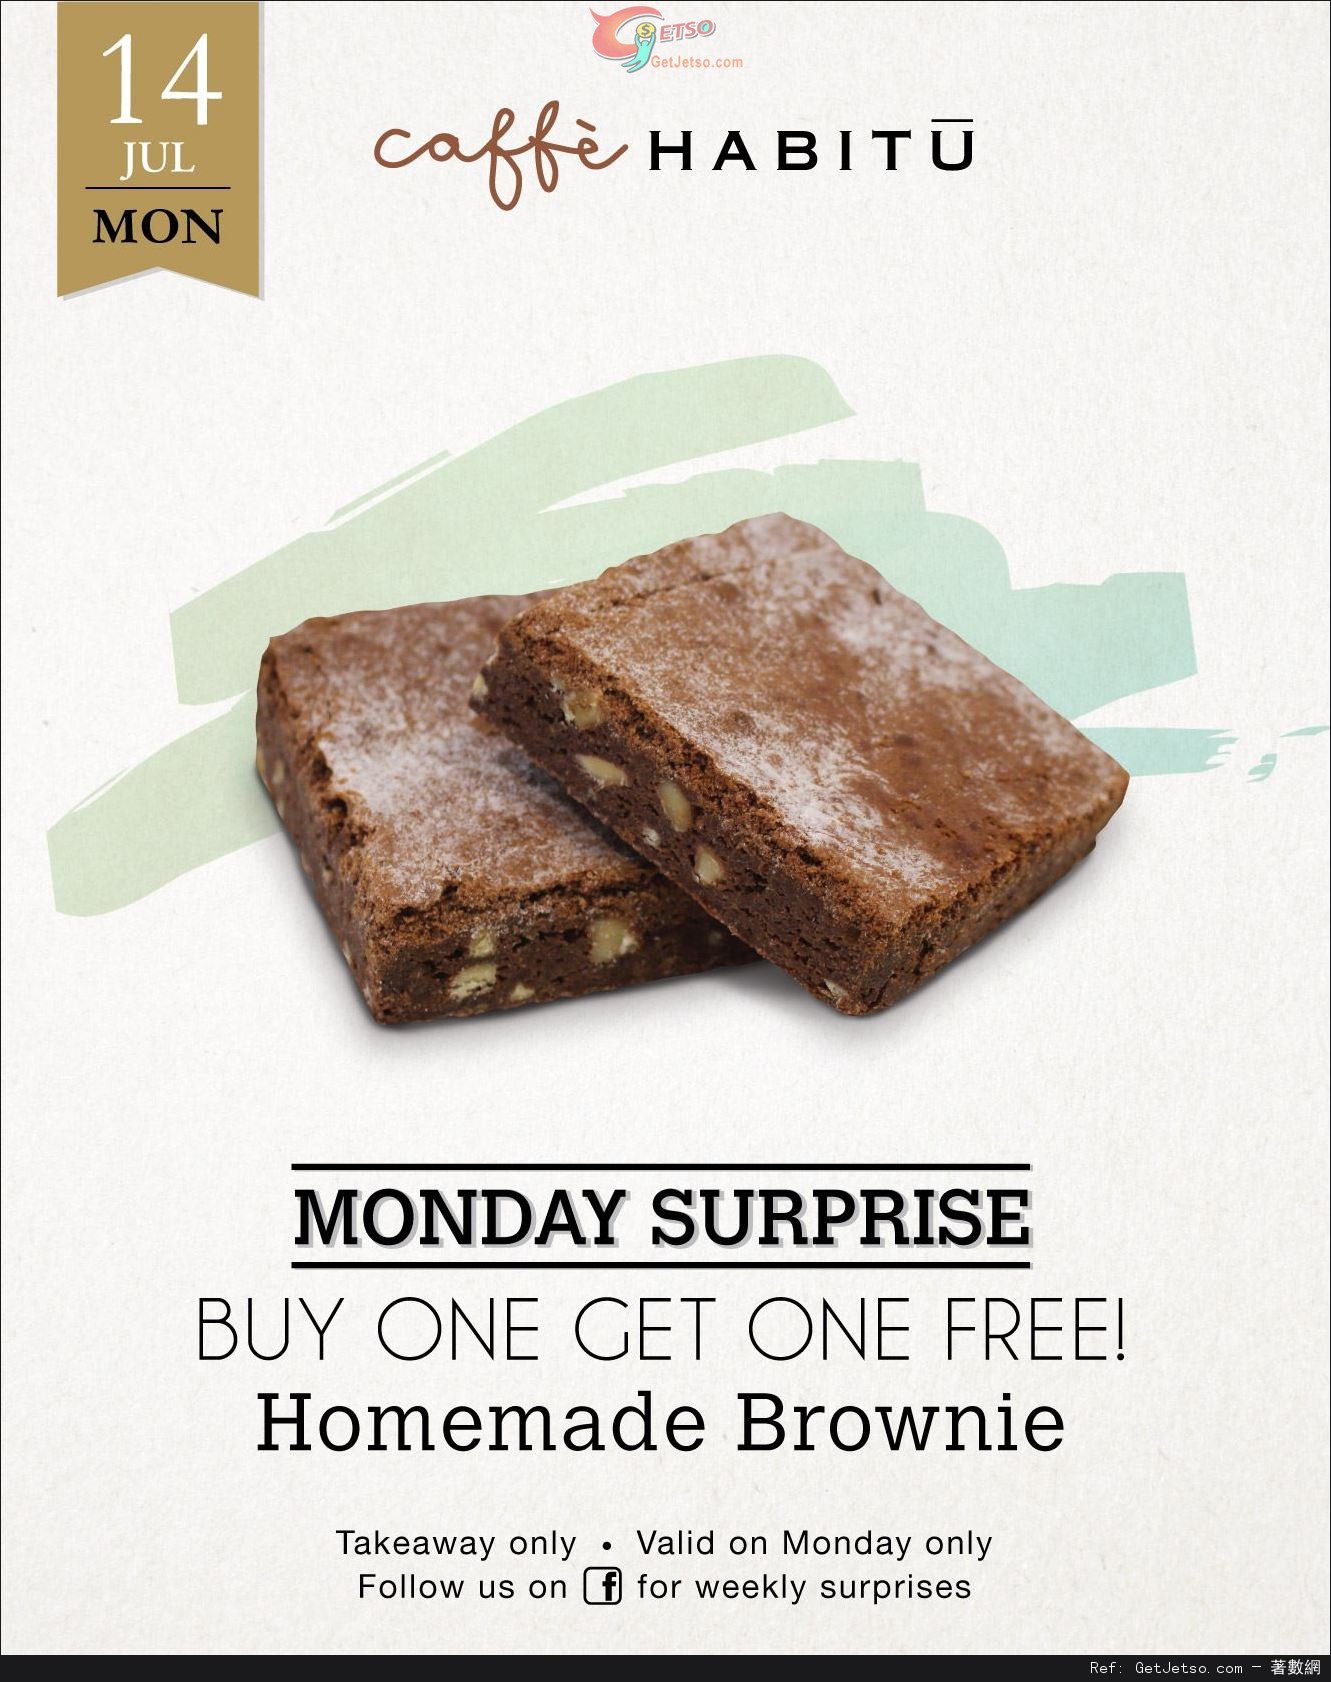 Caffe HABITU Homemade Brownie 買1送1優惠(14年7月14日)圖片1